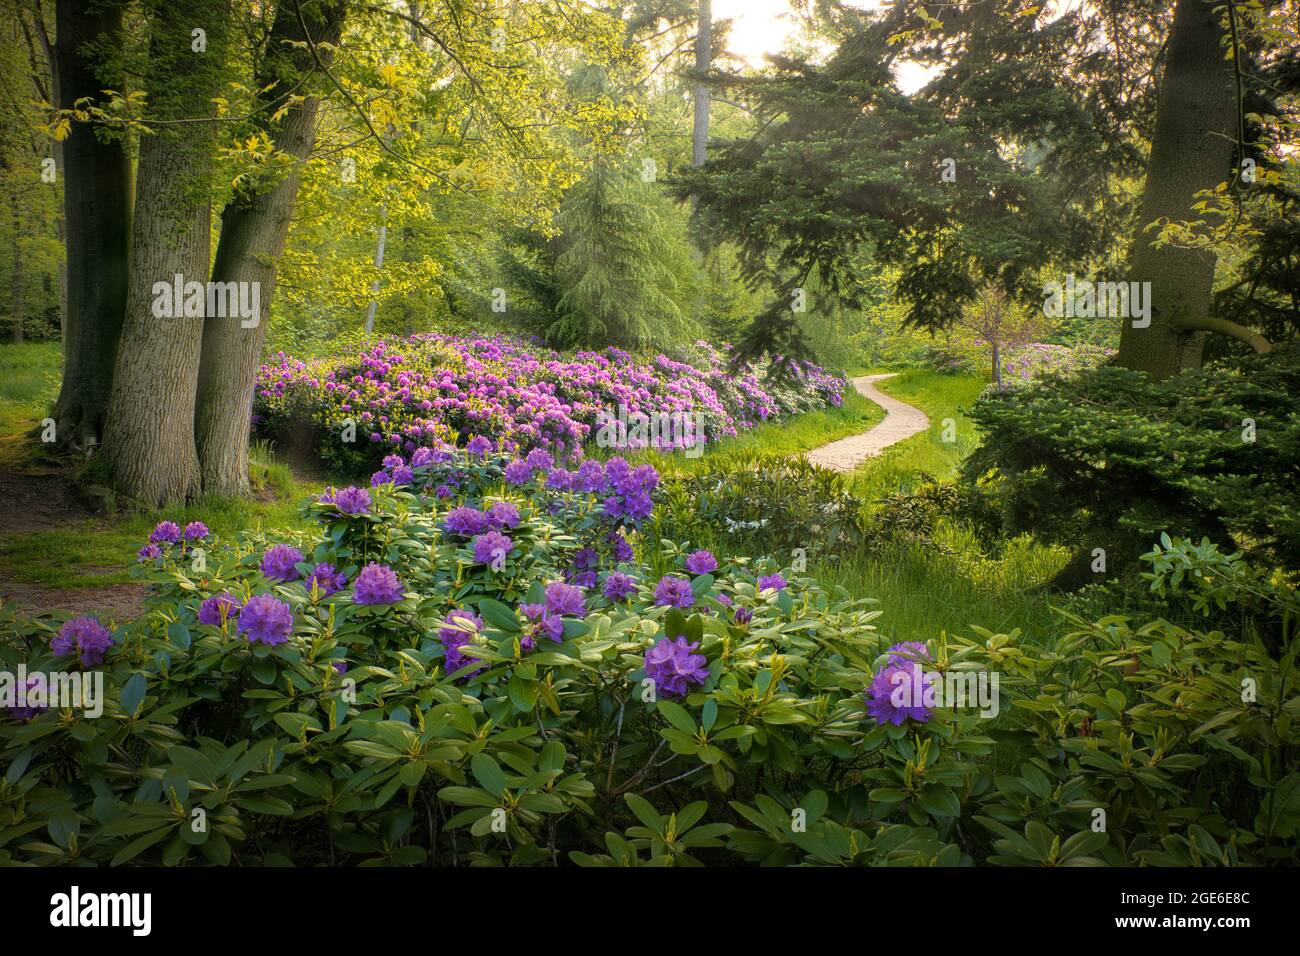 The Netherlands, Õs-Graveland, Rural estate Schaep en Burgh. Flowering rhododendrons. Stock Photo